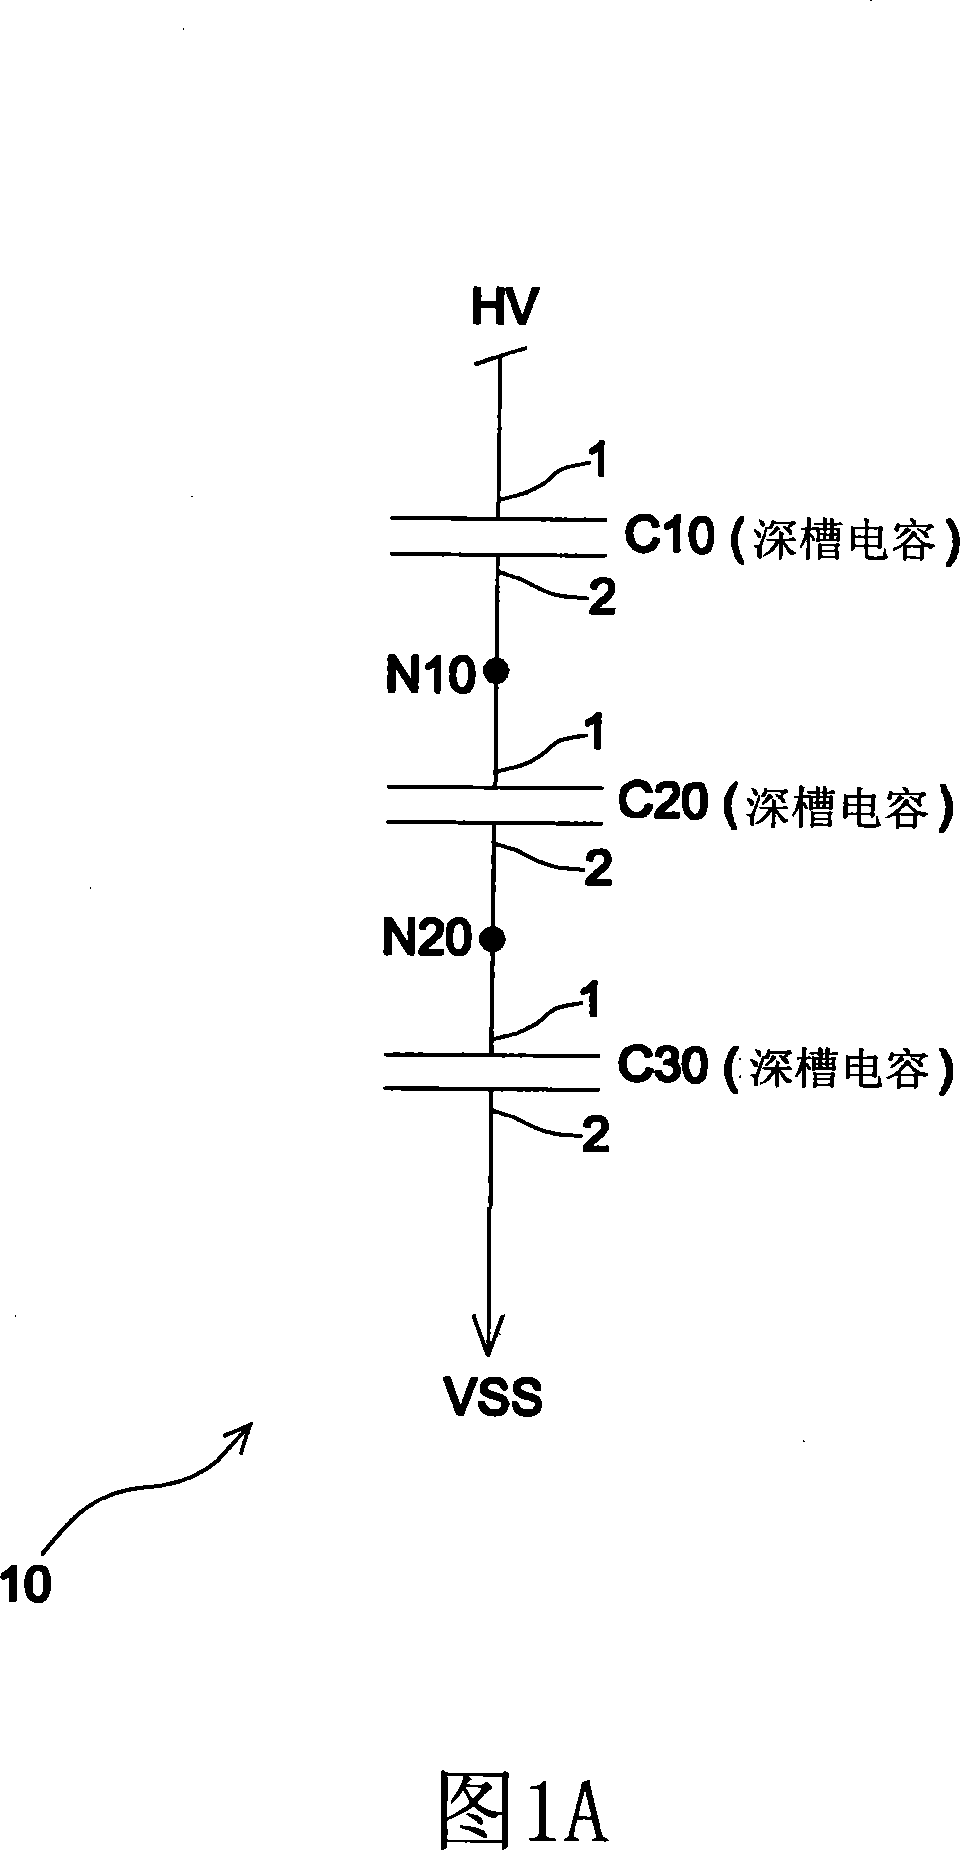 De-coupling capacitance circuit